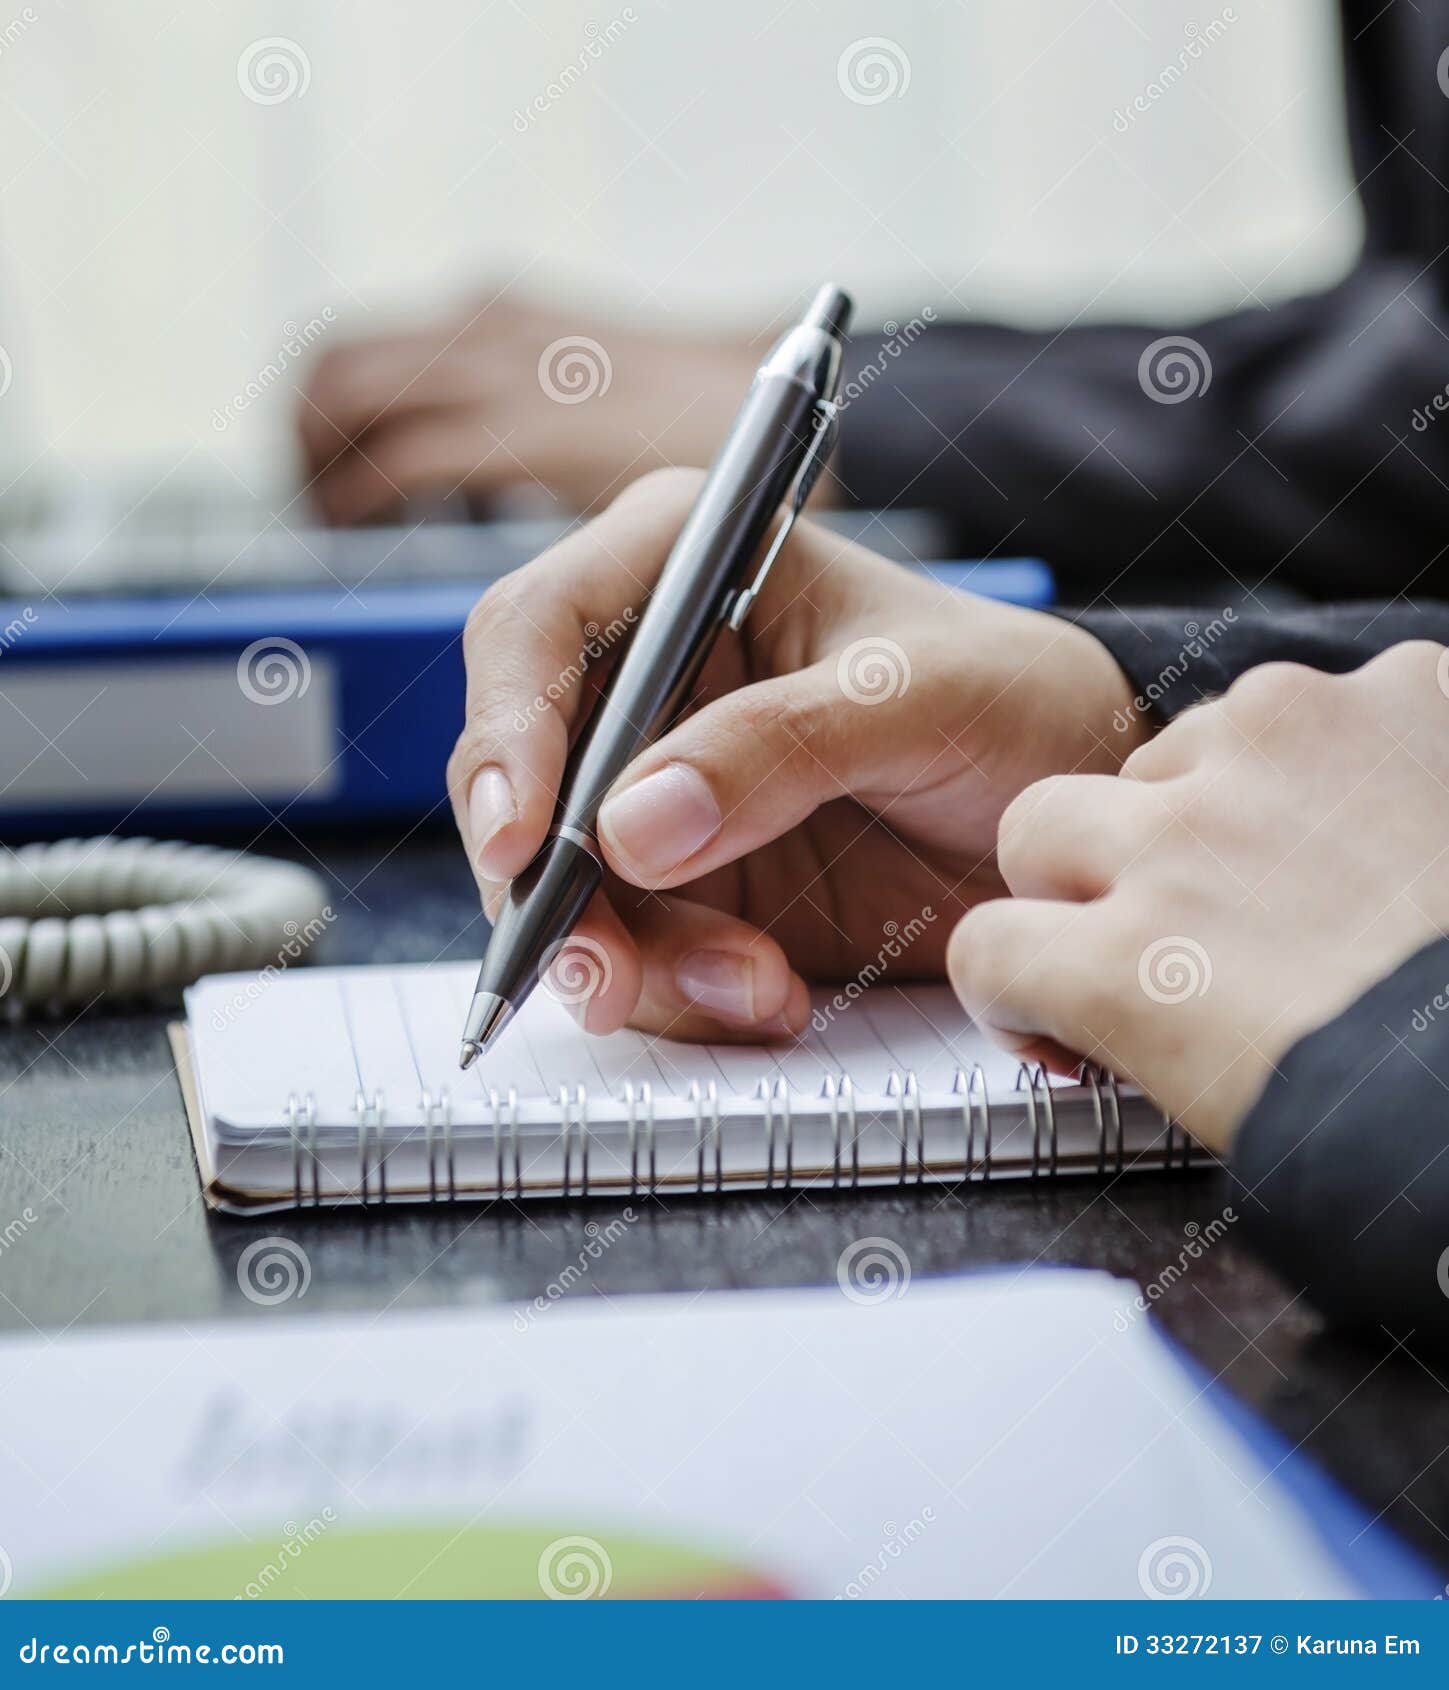 Handwriting stock image. Image of finger, employment - 33272137